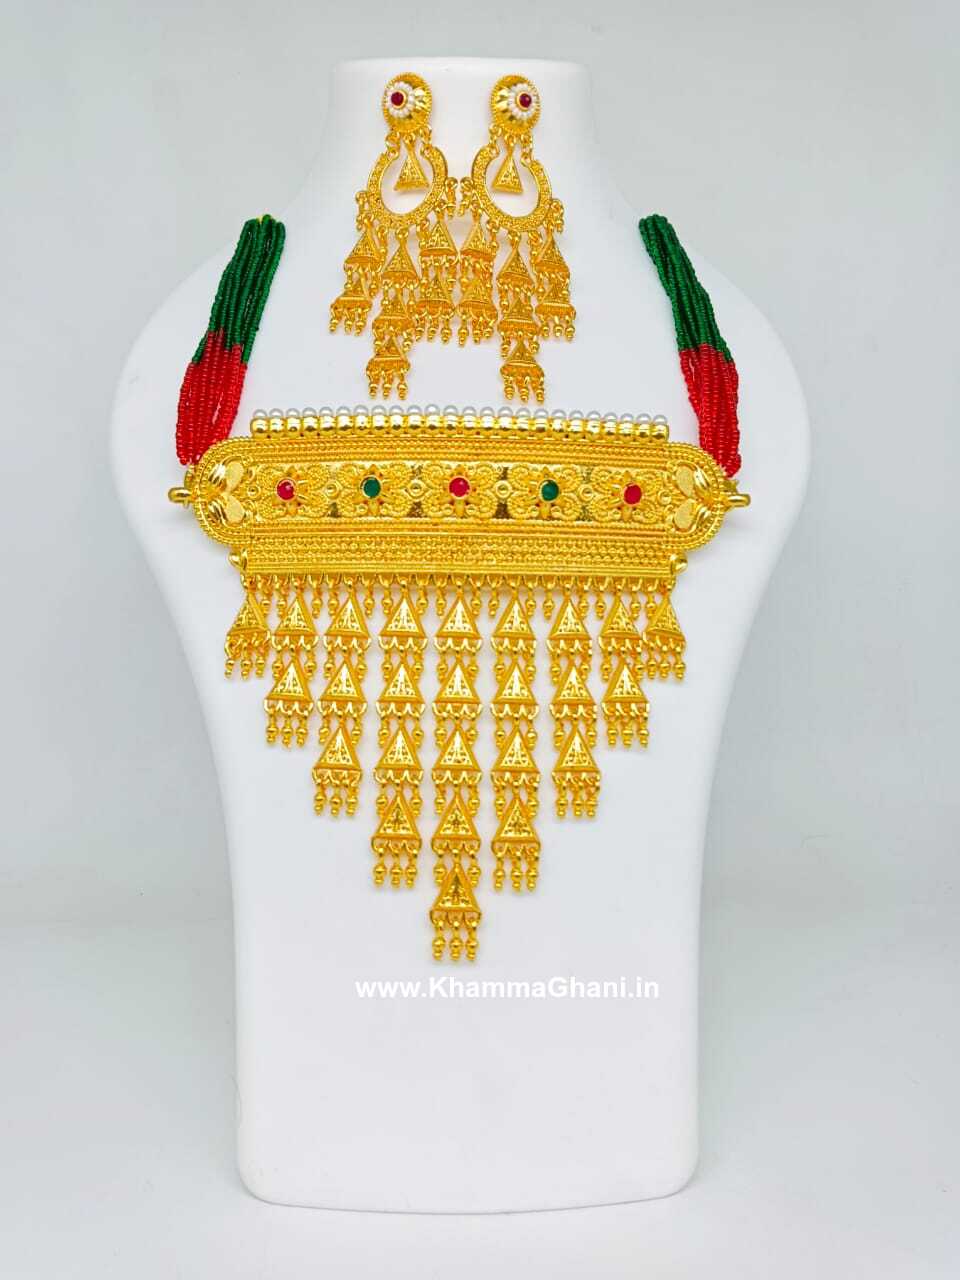 Rajputi Aad Necklace with earrings